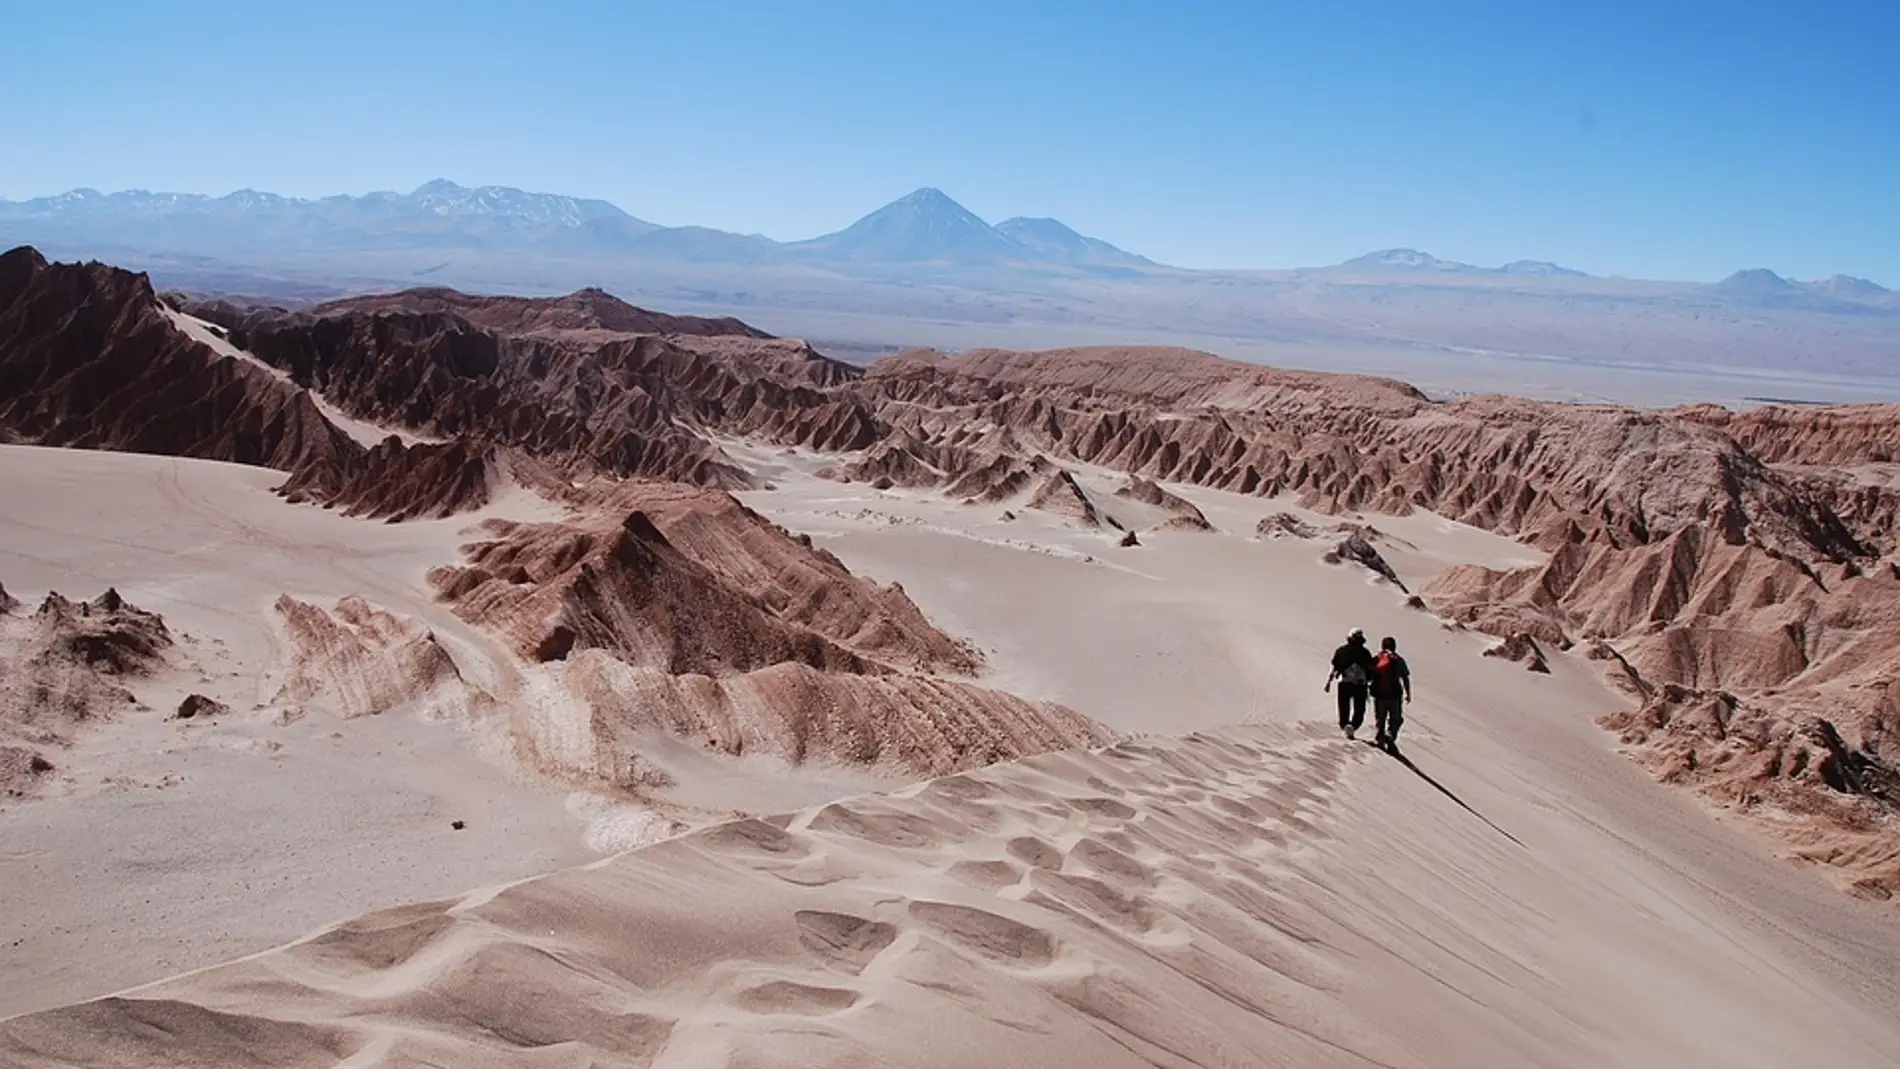 Desierto de Atacama. Chile